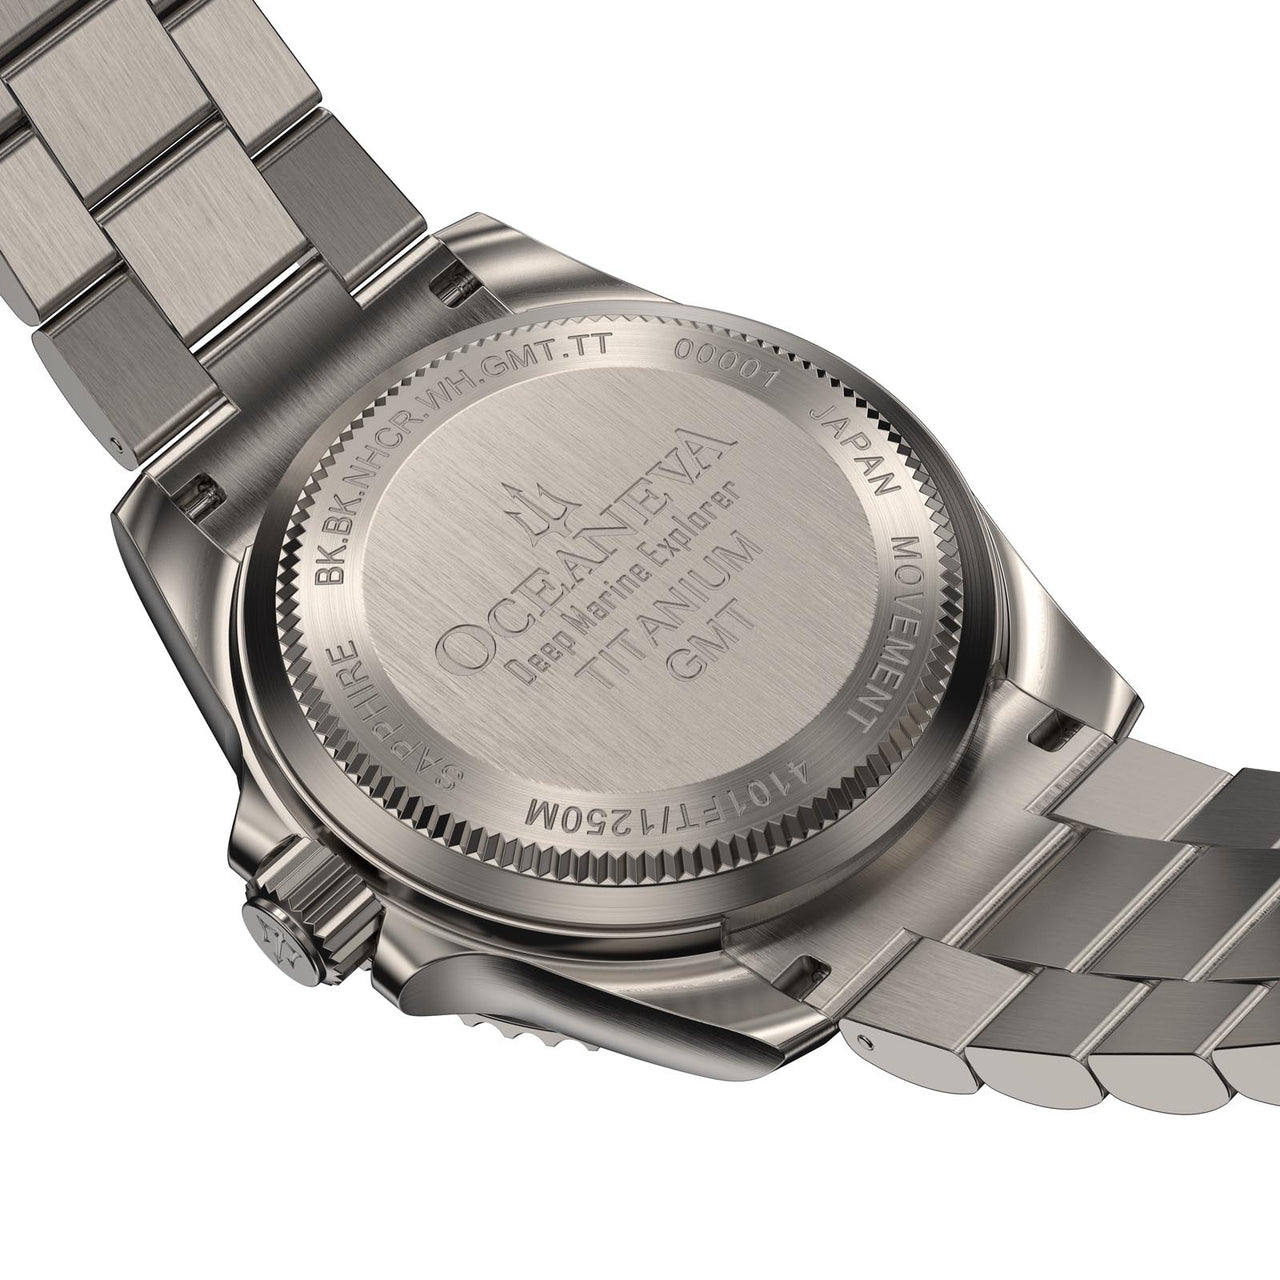 Oceaneva™ Men's GMT TITANIUM Automatic Deep Marine Explorer 1250M Black & White Ceramic Bezel Watch